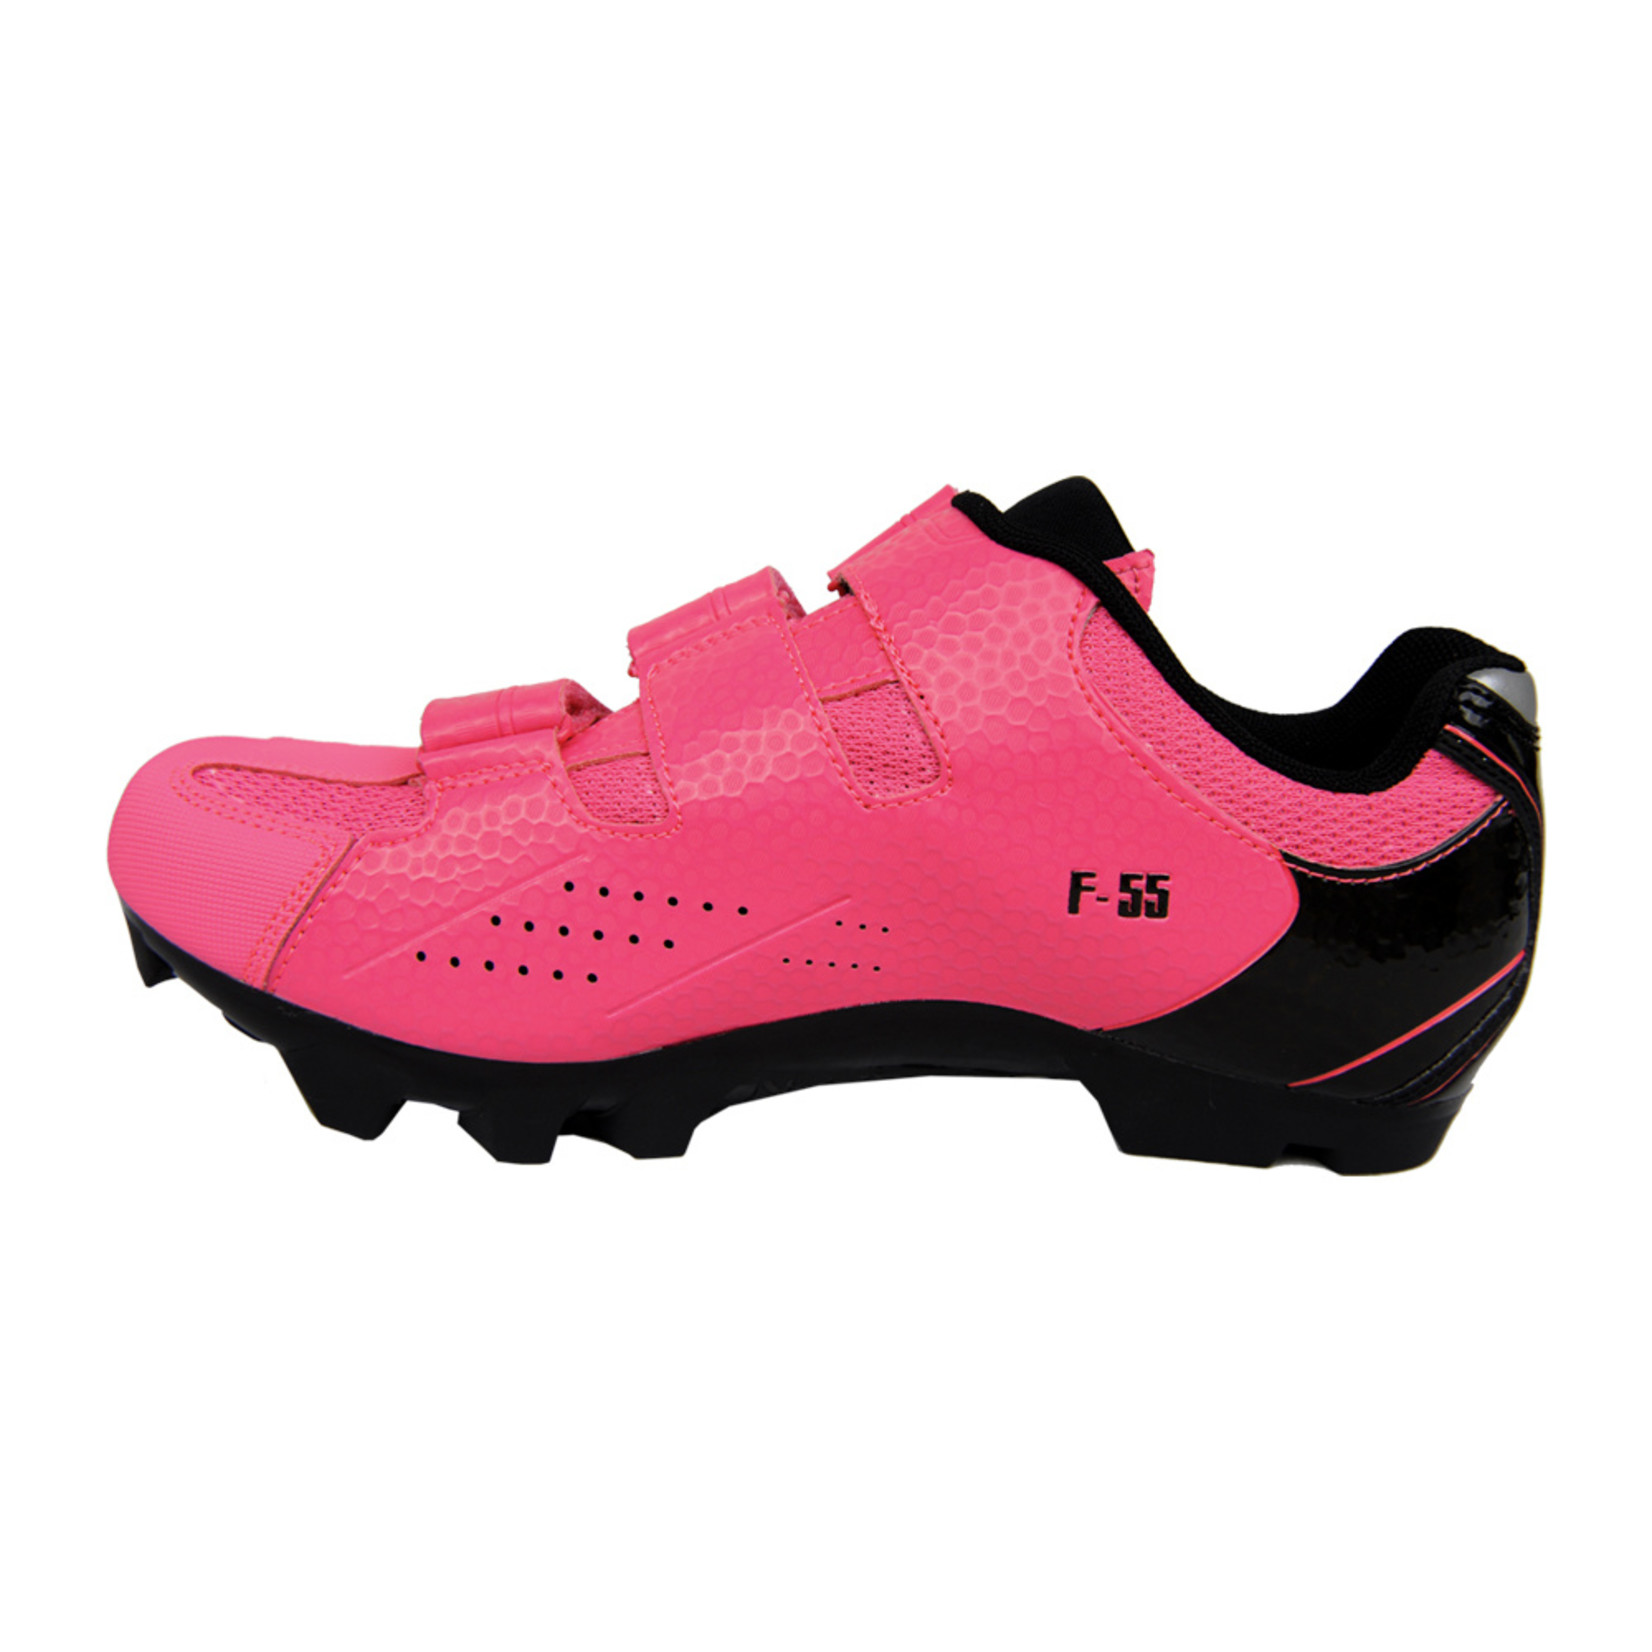 FLR FLR MTB Shoes - M250 Outsole - Laces - F-55-III - Size 42 - Black - Pink